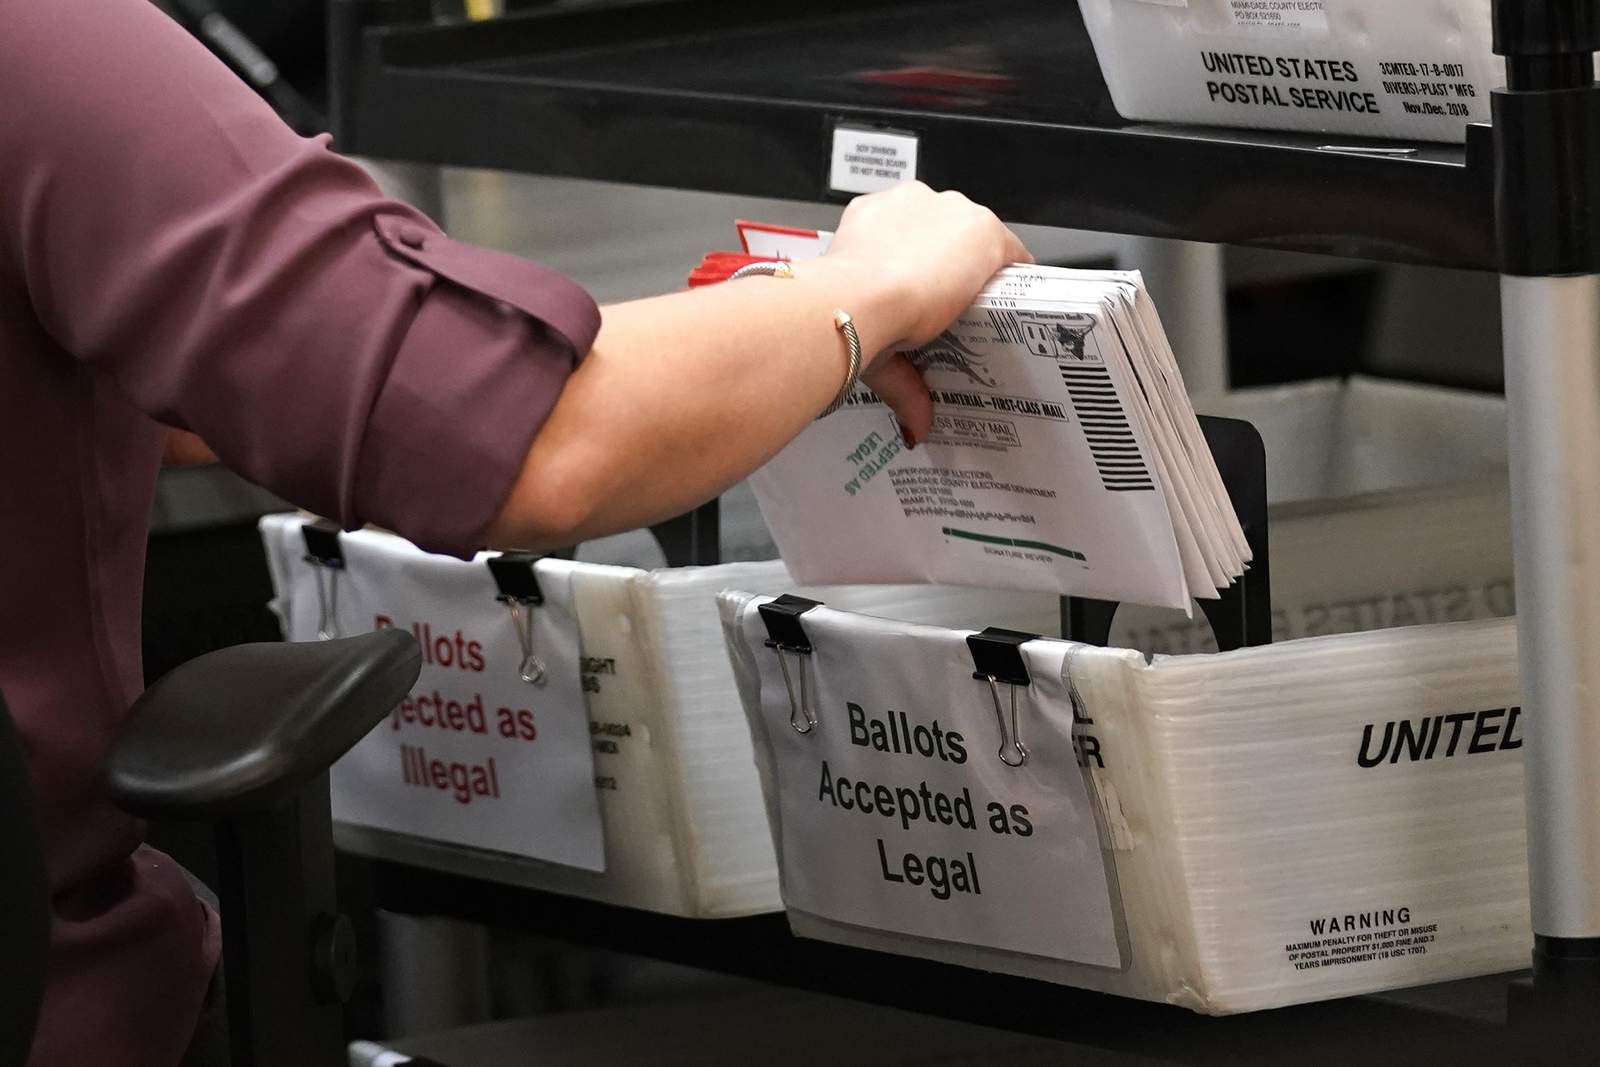 4 dozen undelivered ballots found at Florida post office